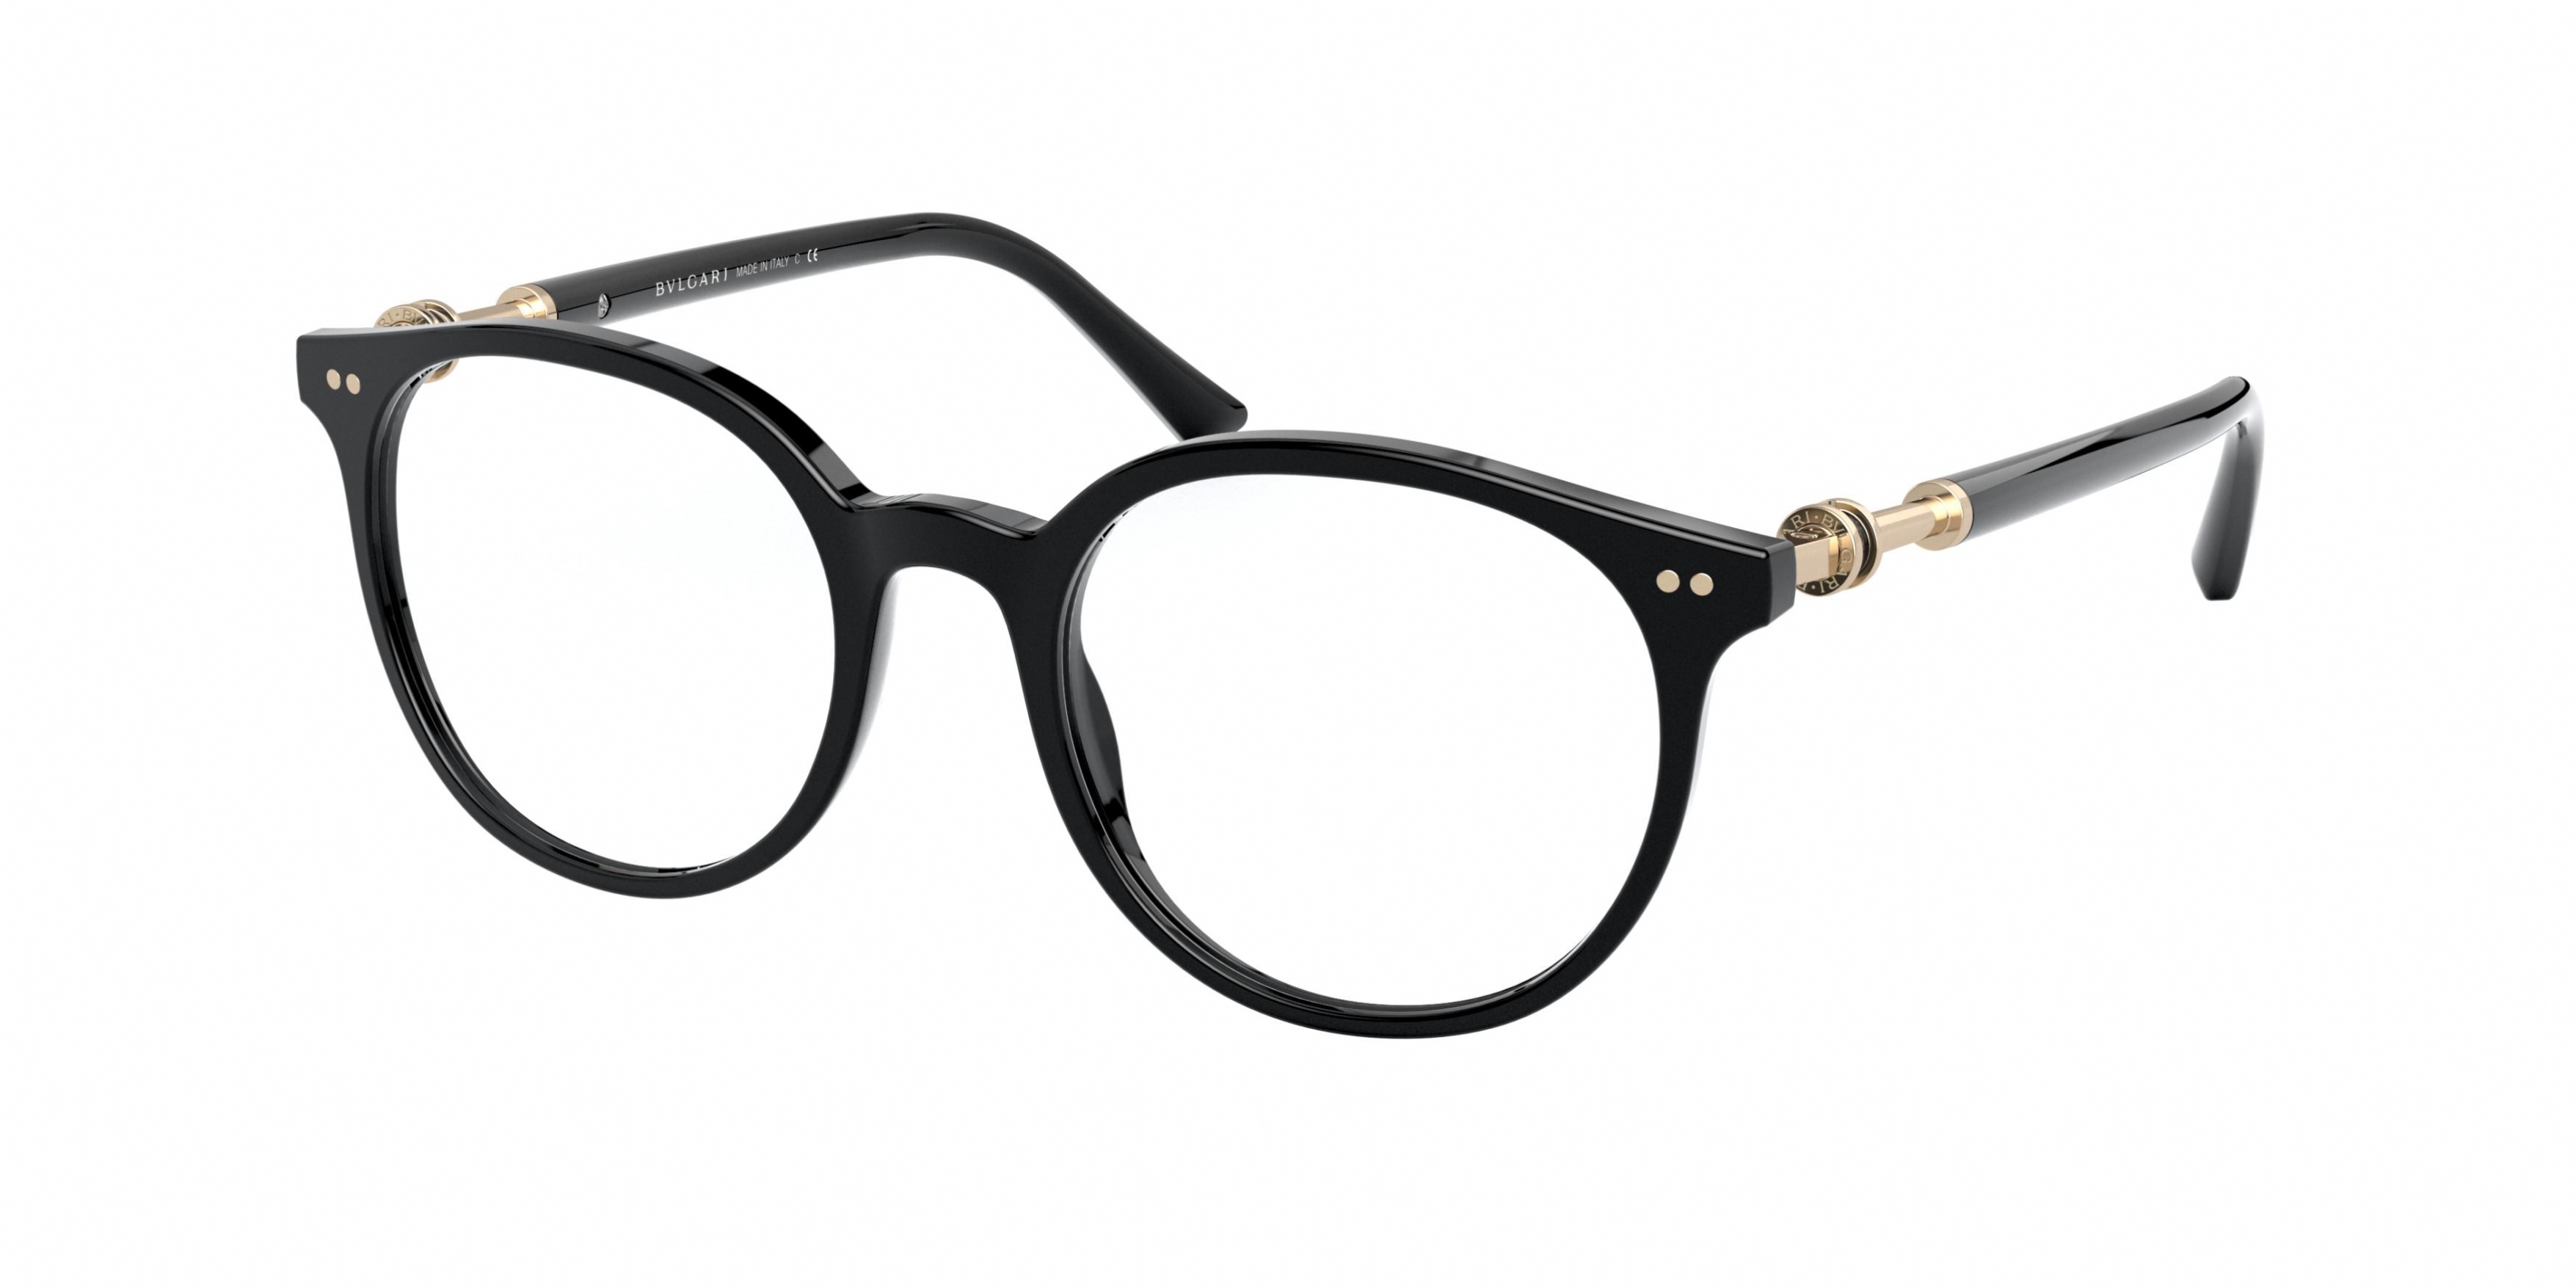 Buy Bvlgari Eyeglasses directly from OpticsFast.com